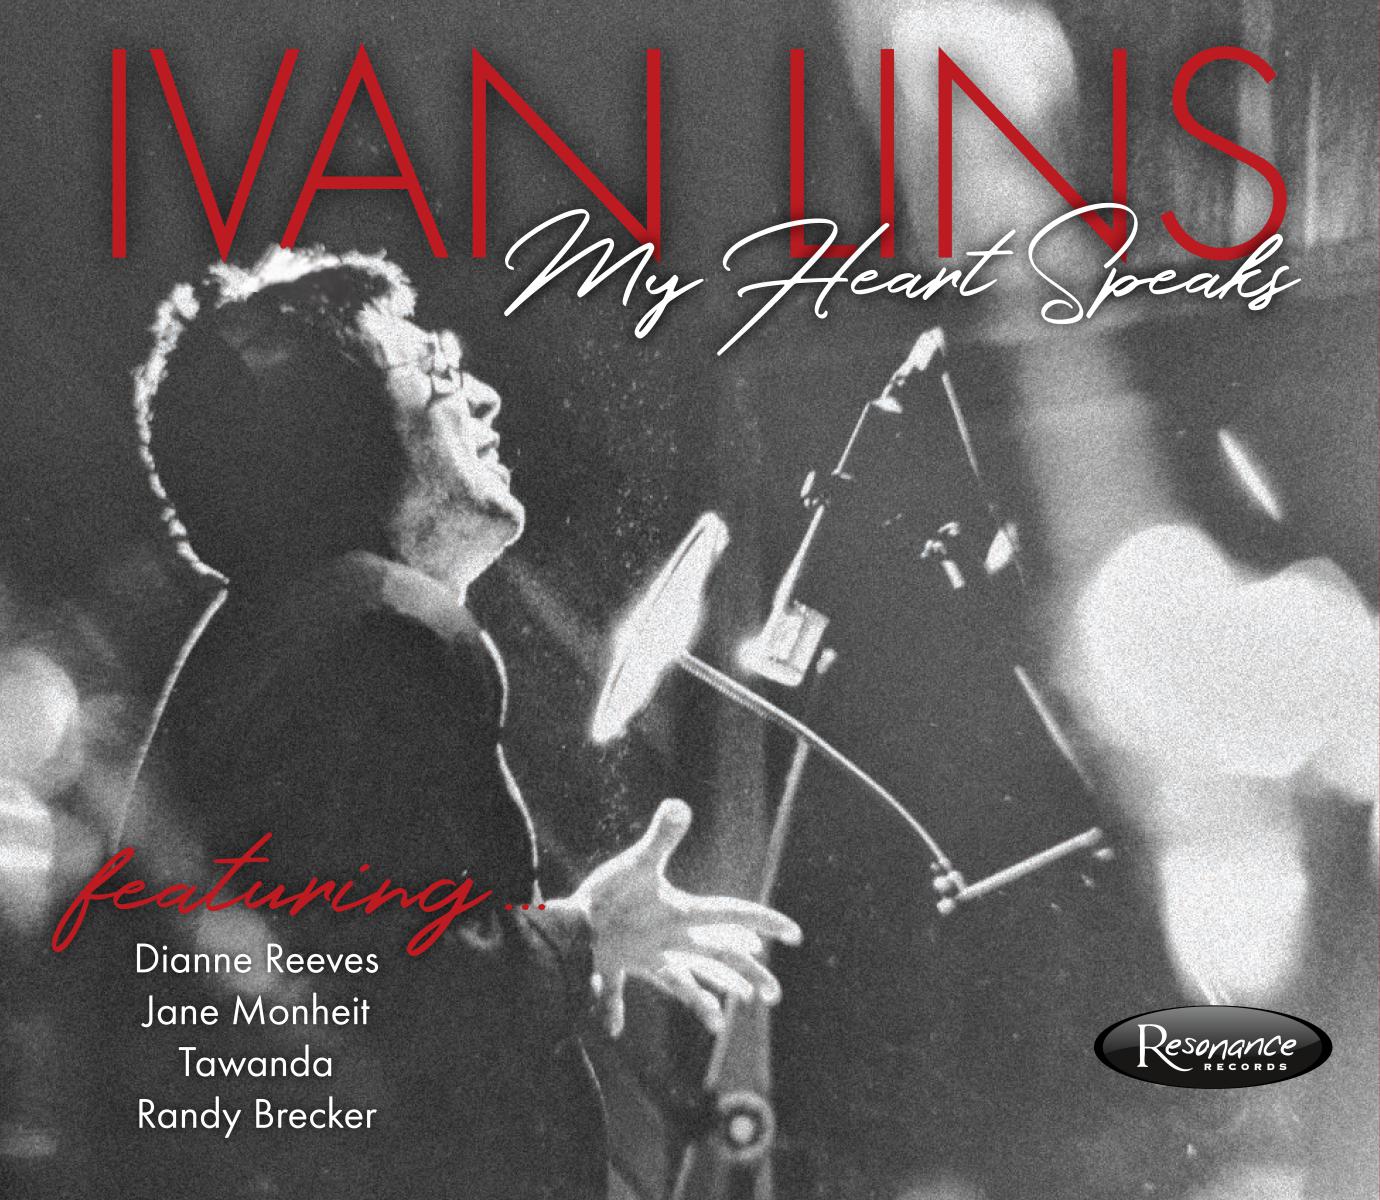 revistaprosaversoearte.com - 'My heart speaks' álbum de Ivan Lins, lançado pela Resonance Records